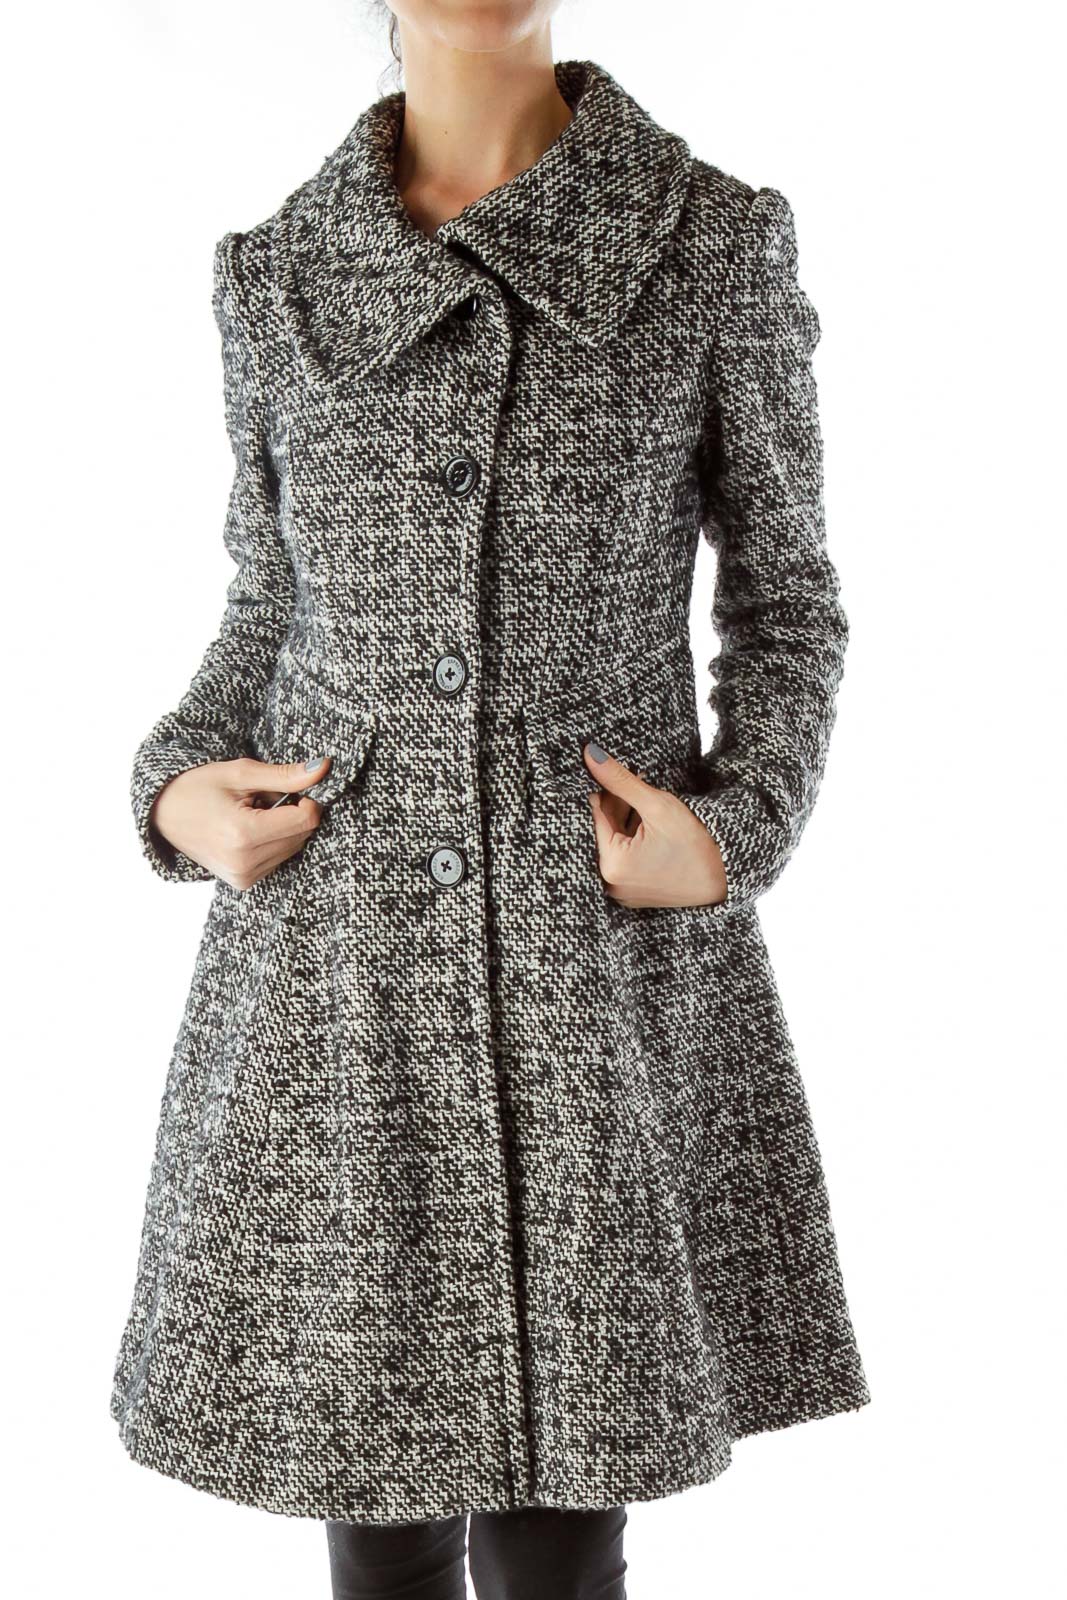 Express - Black White Tweed Pea Coat Polyester | SilkRoll